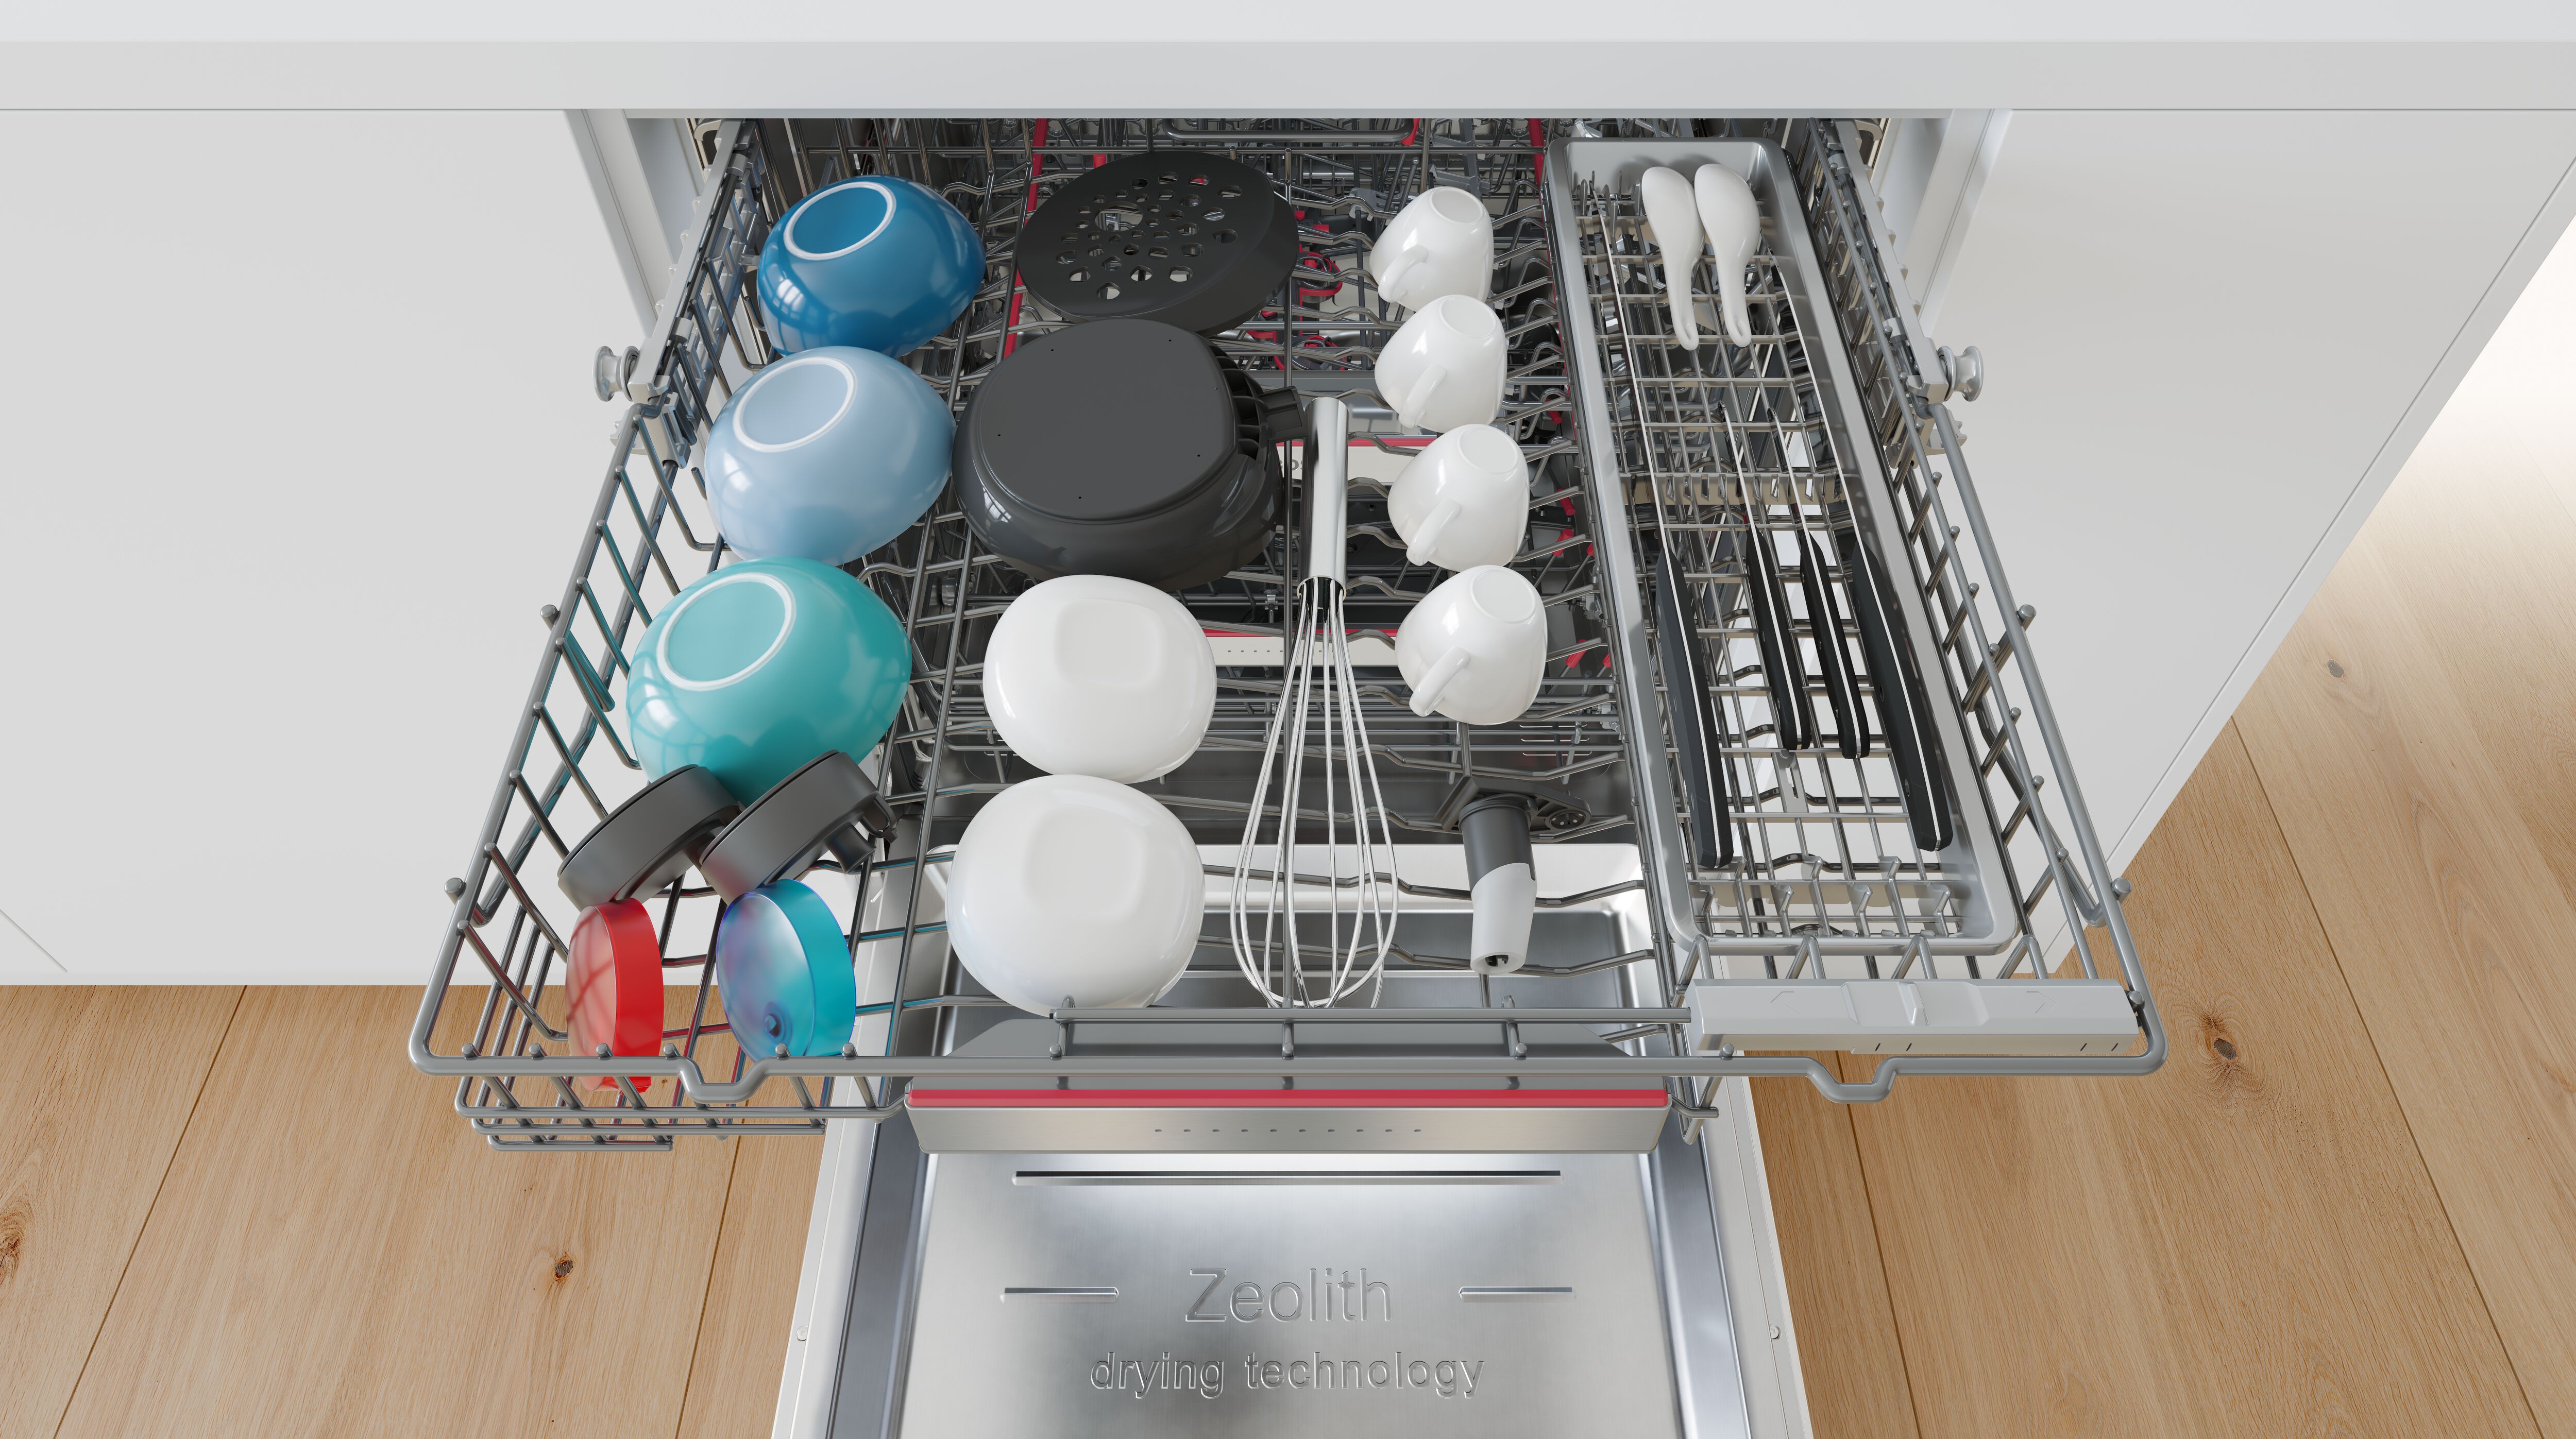 The PerfectDry dishwasher from Robert Bosch Hausgeräte